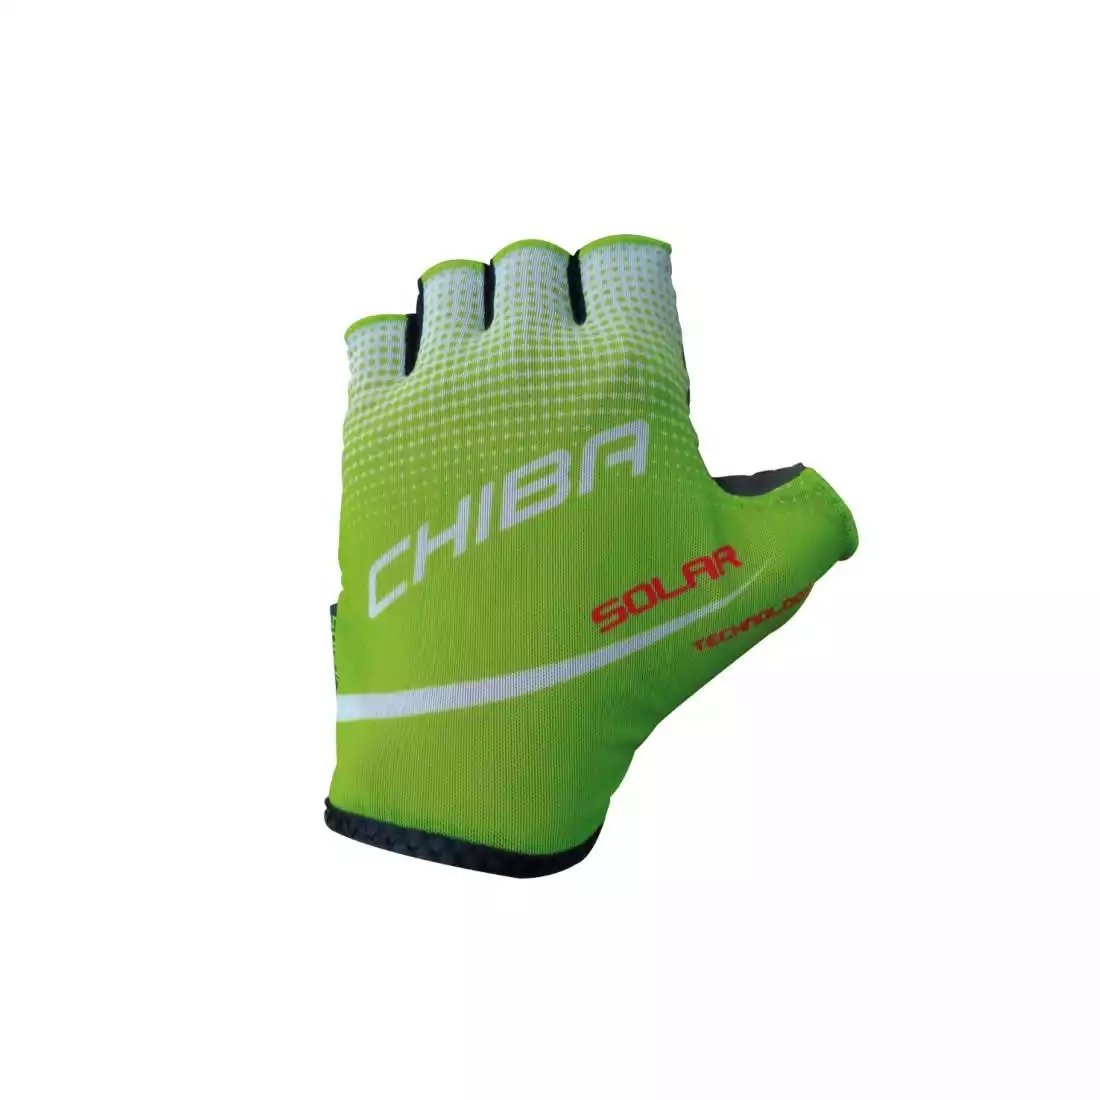 CHIBA SOLAR Mănuși de ciclism, verde